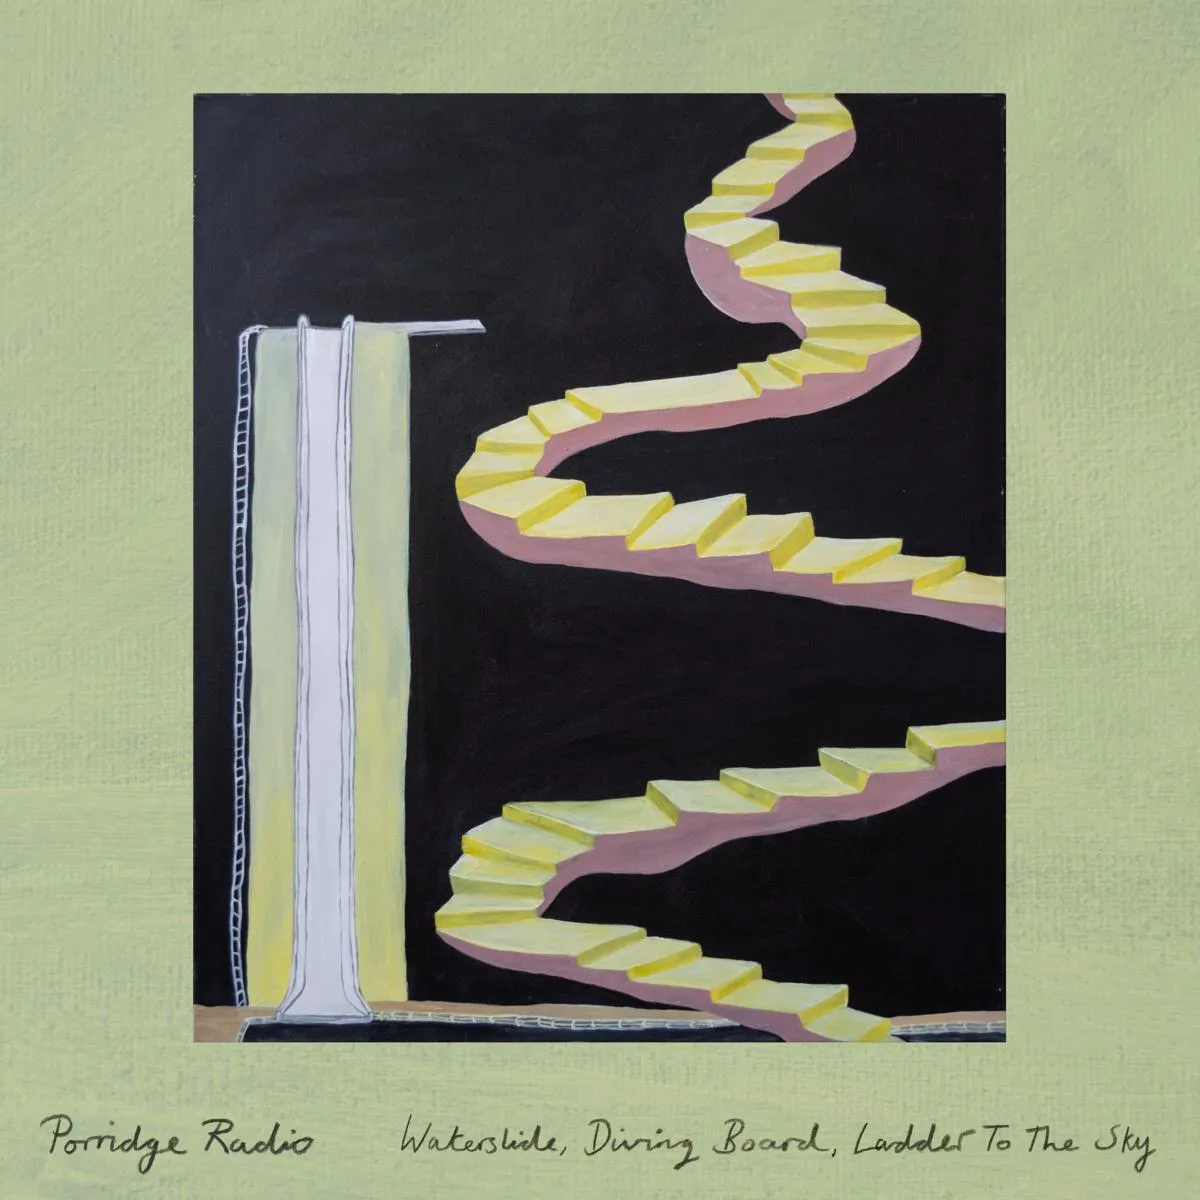 <strong>Porridge Radio - Waterslide, Diving Board, Ladder To The Sky</strong> (Vinyl LP - pink)